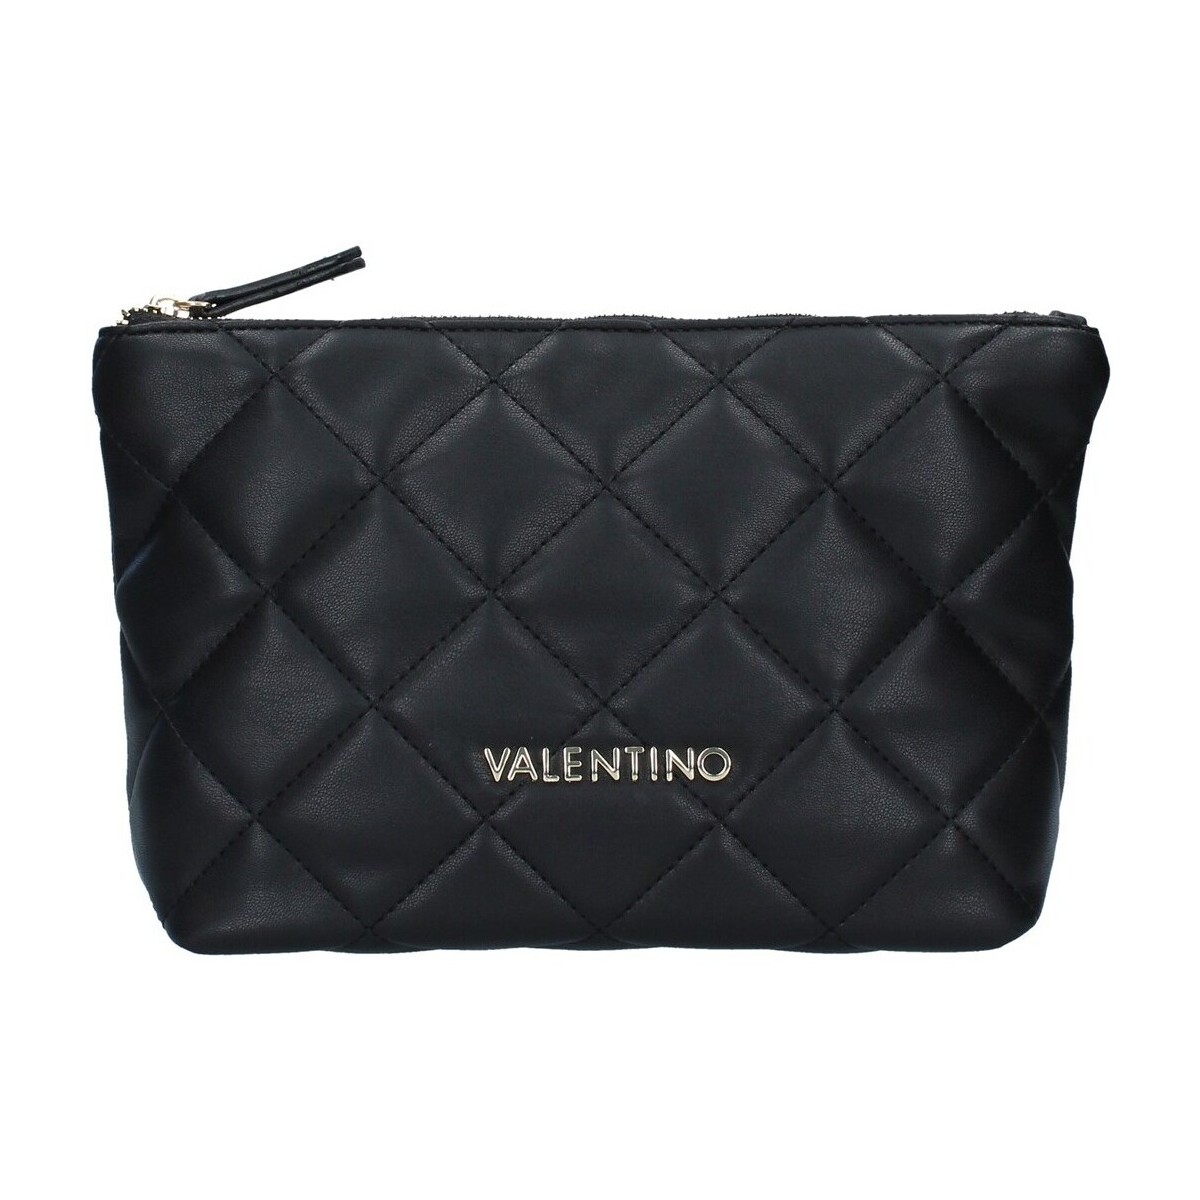 Bolsos Mujer Neceser Valentino Bags VBE3KK513 Negro